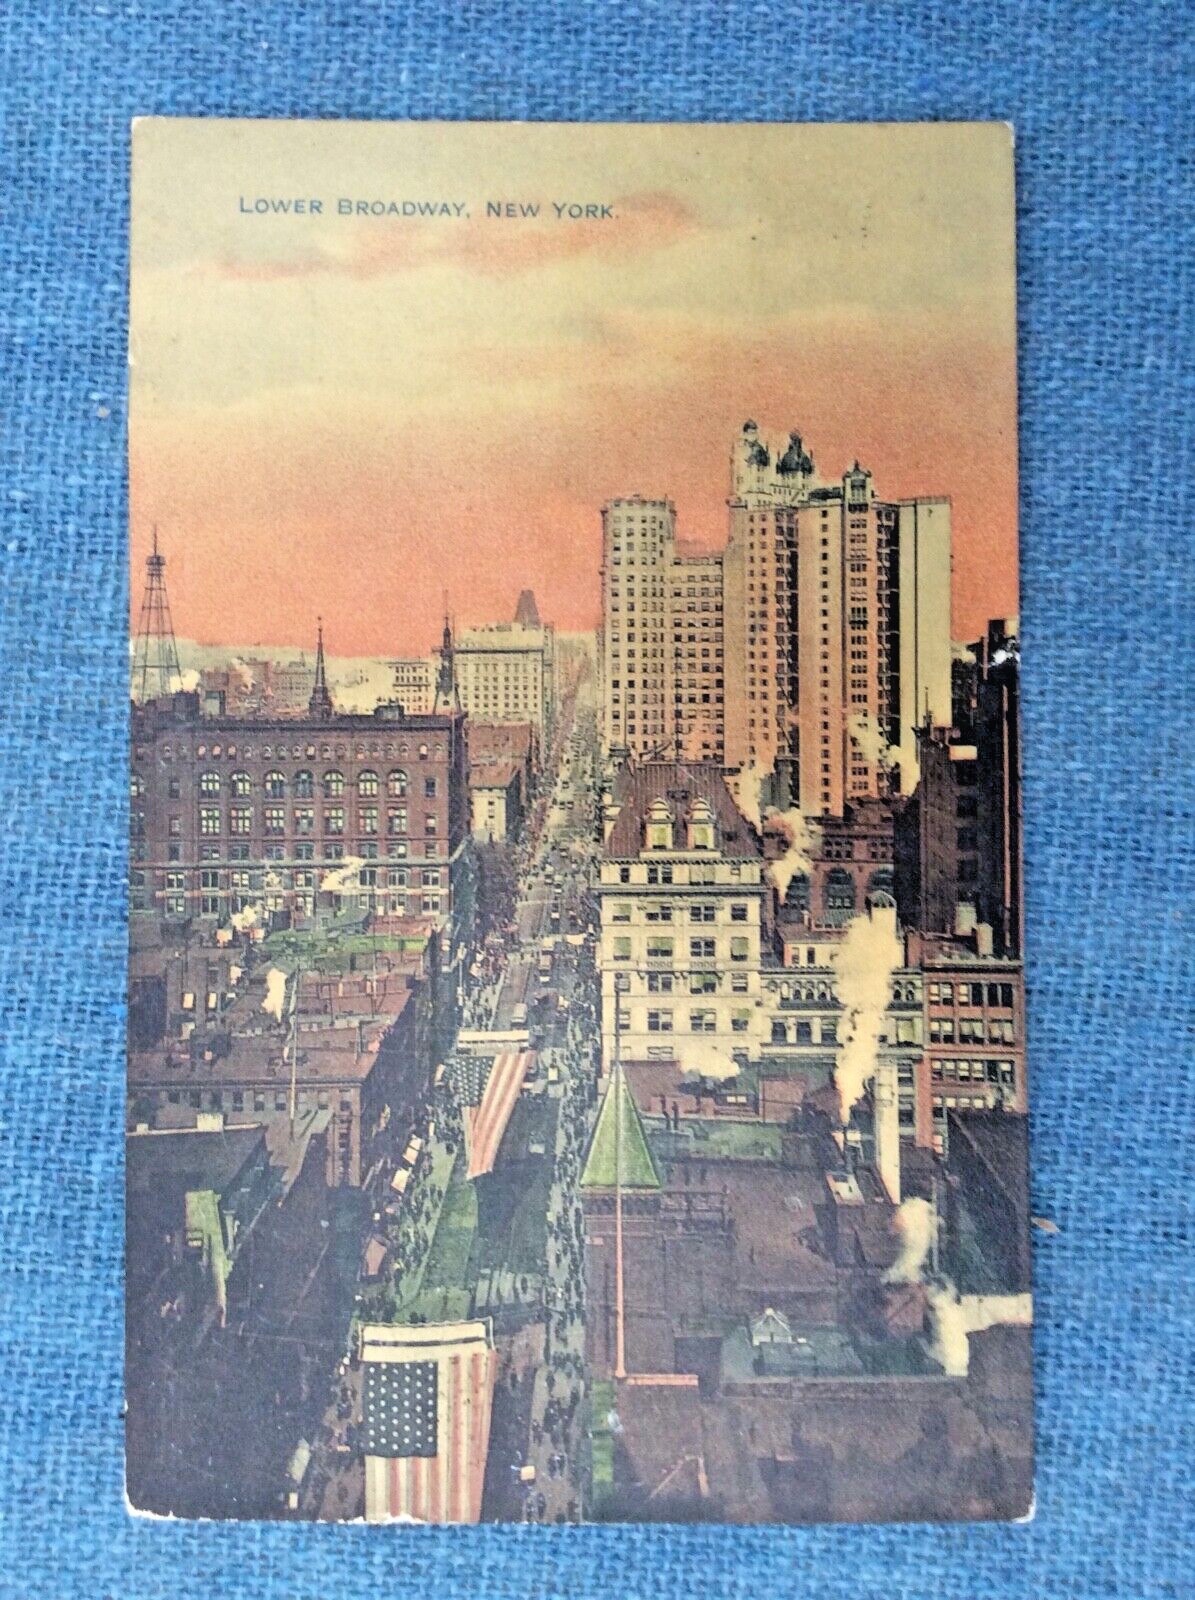 Vintage 1910 Postcard Depicting New York City\'s Lower Broadway; Urbanism